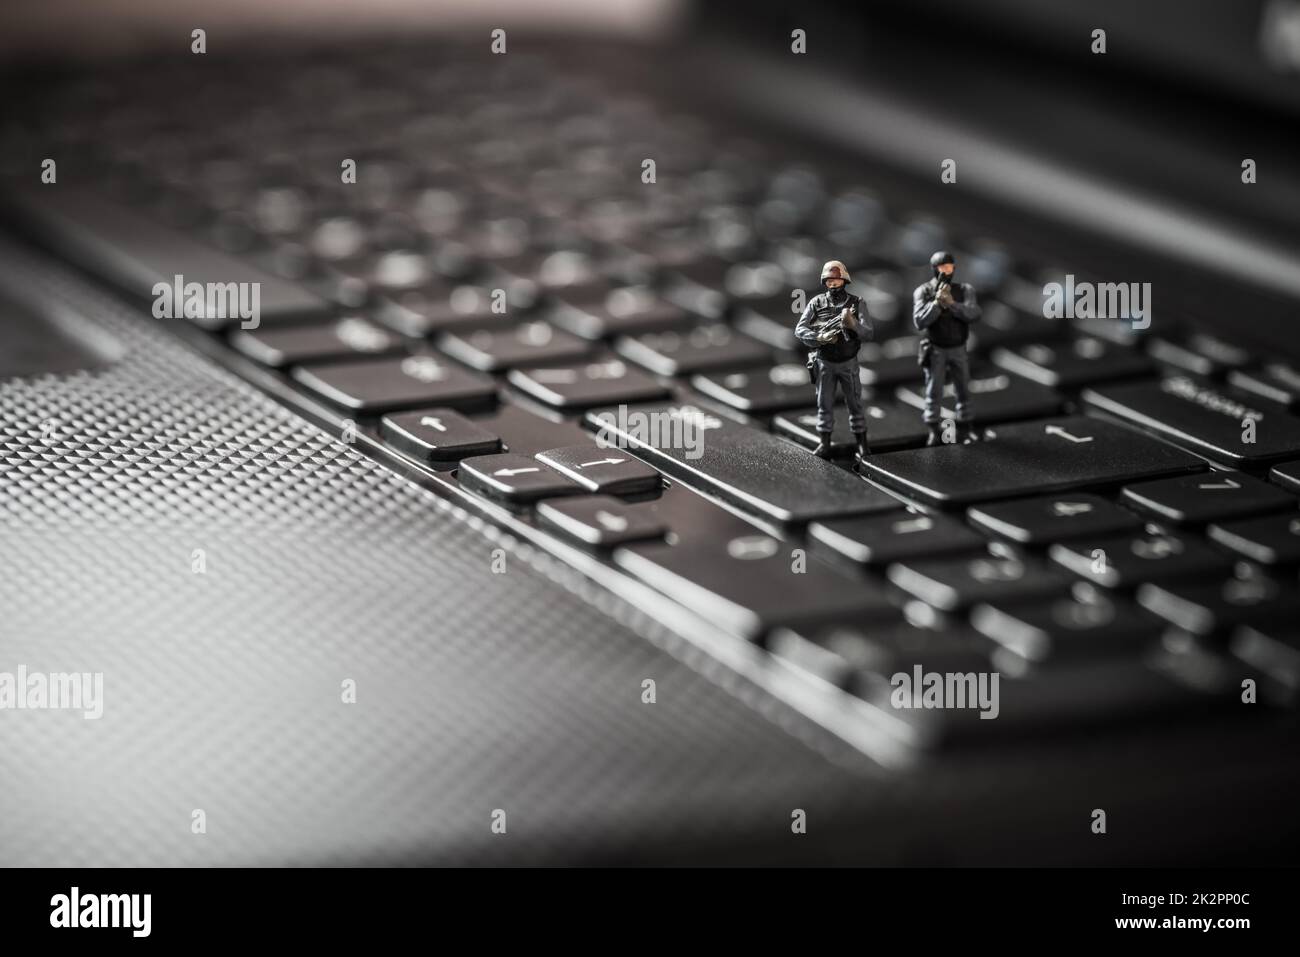 Miniatur swat Mannschaft Schutz Laptop-Computer. Technologie-Konzept Stockfoto